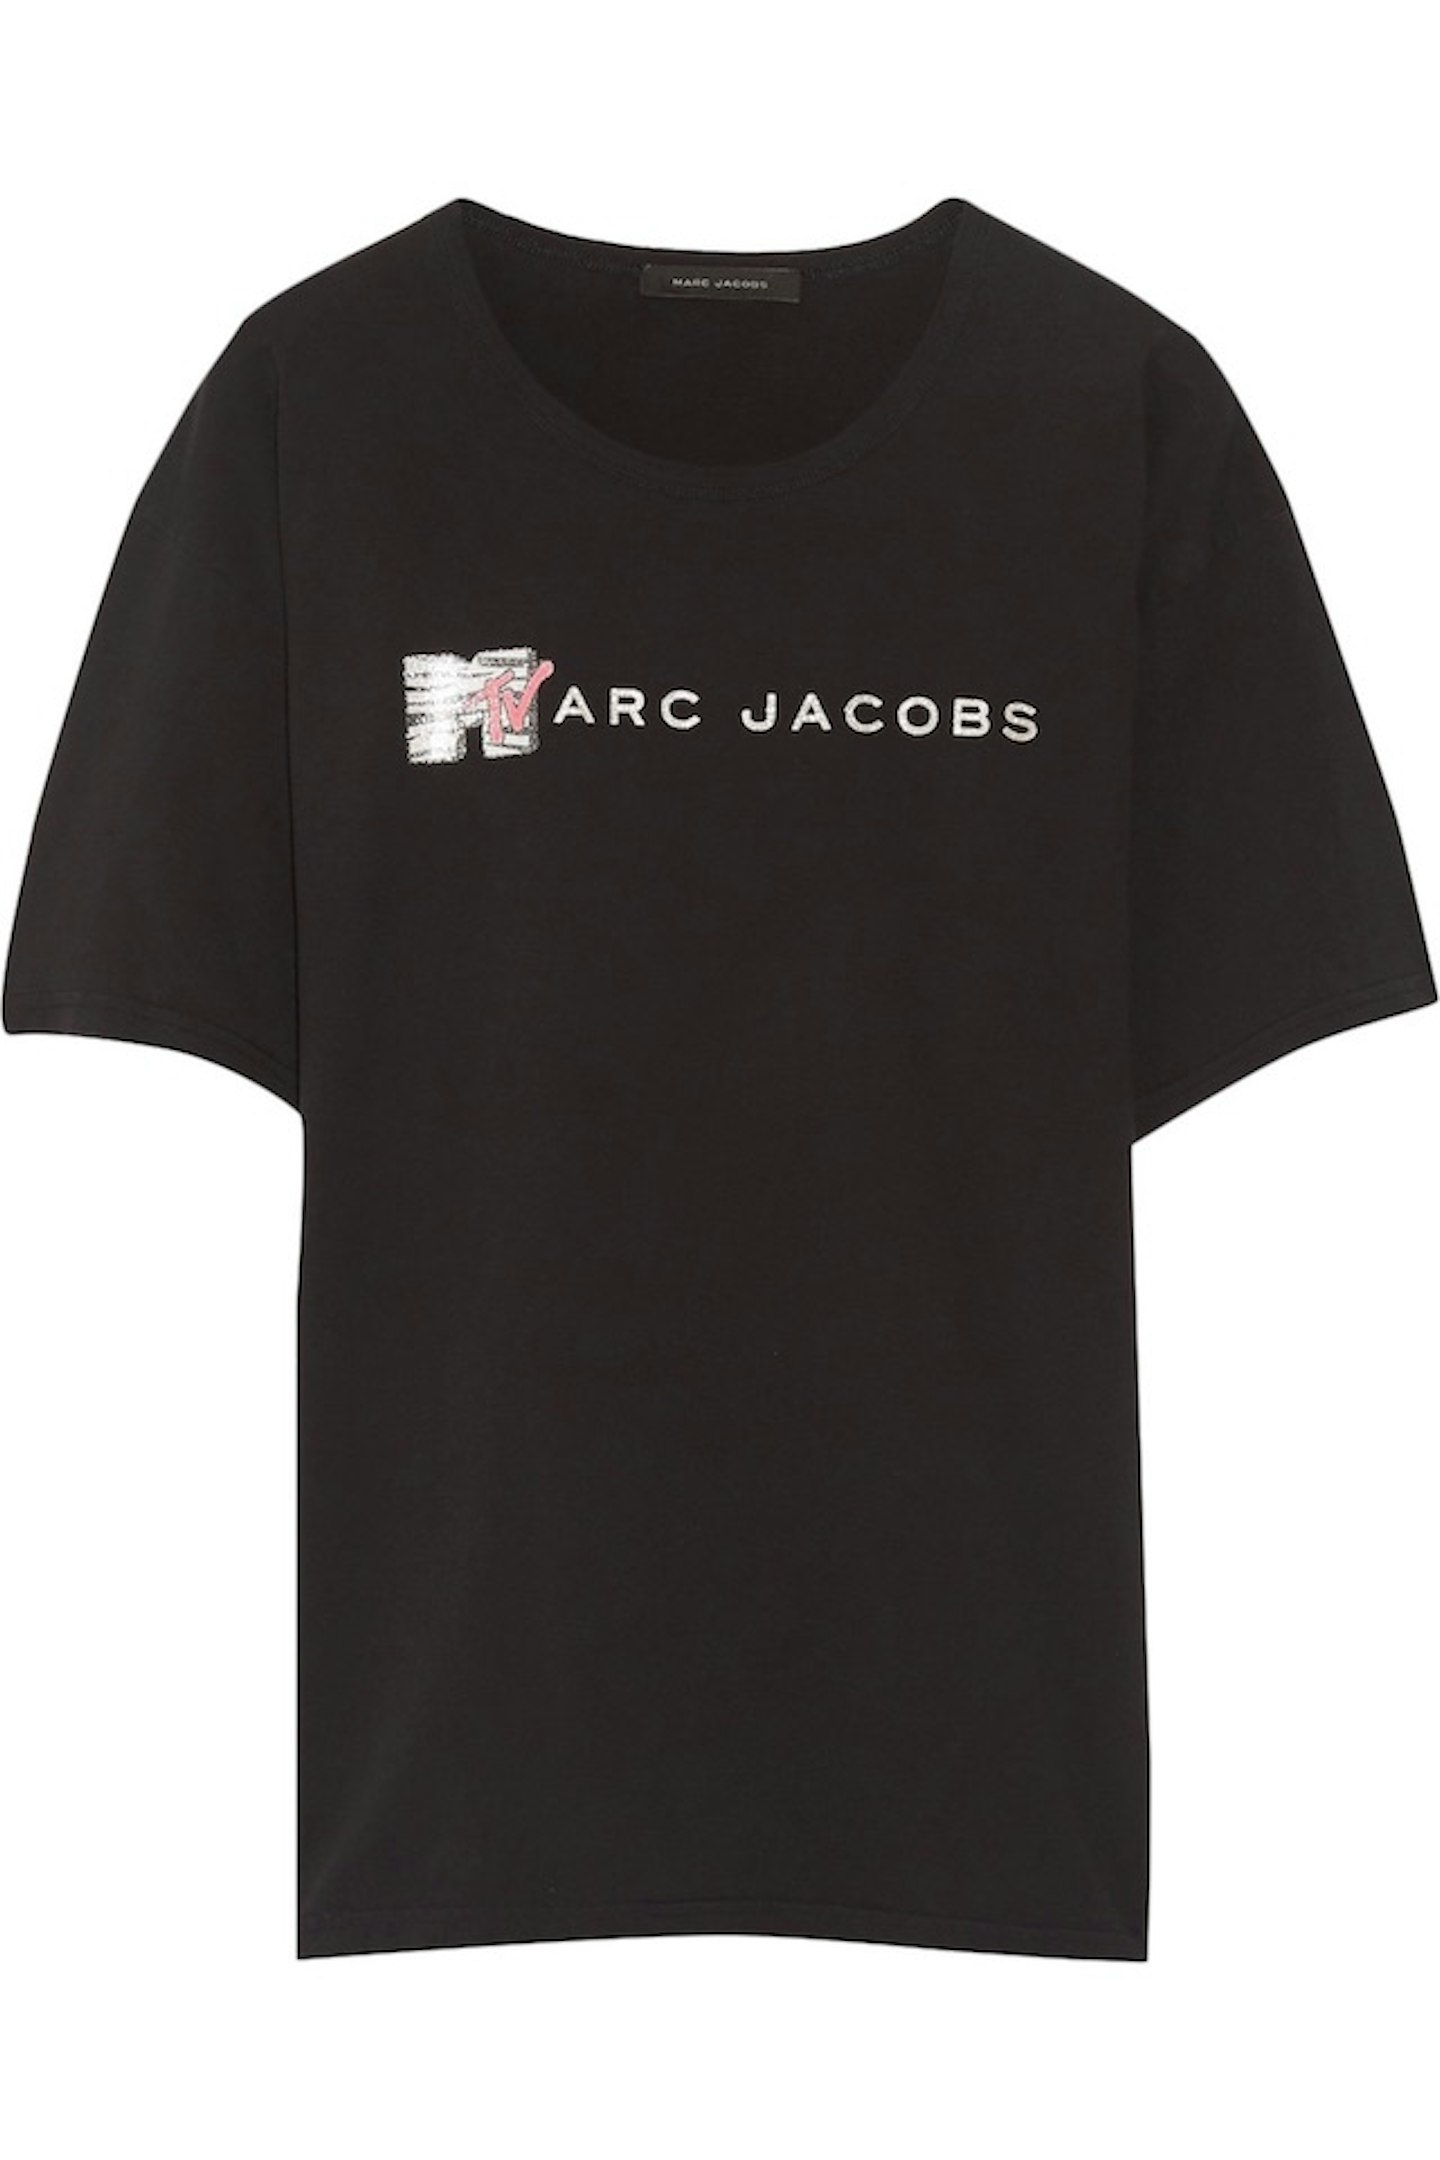 Marc Jacobs black logo tee